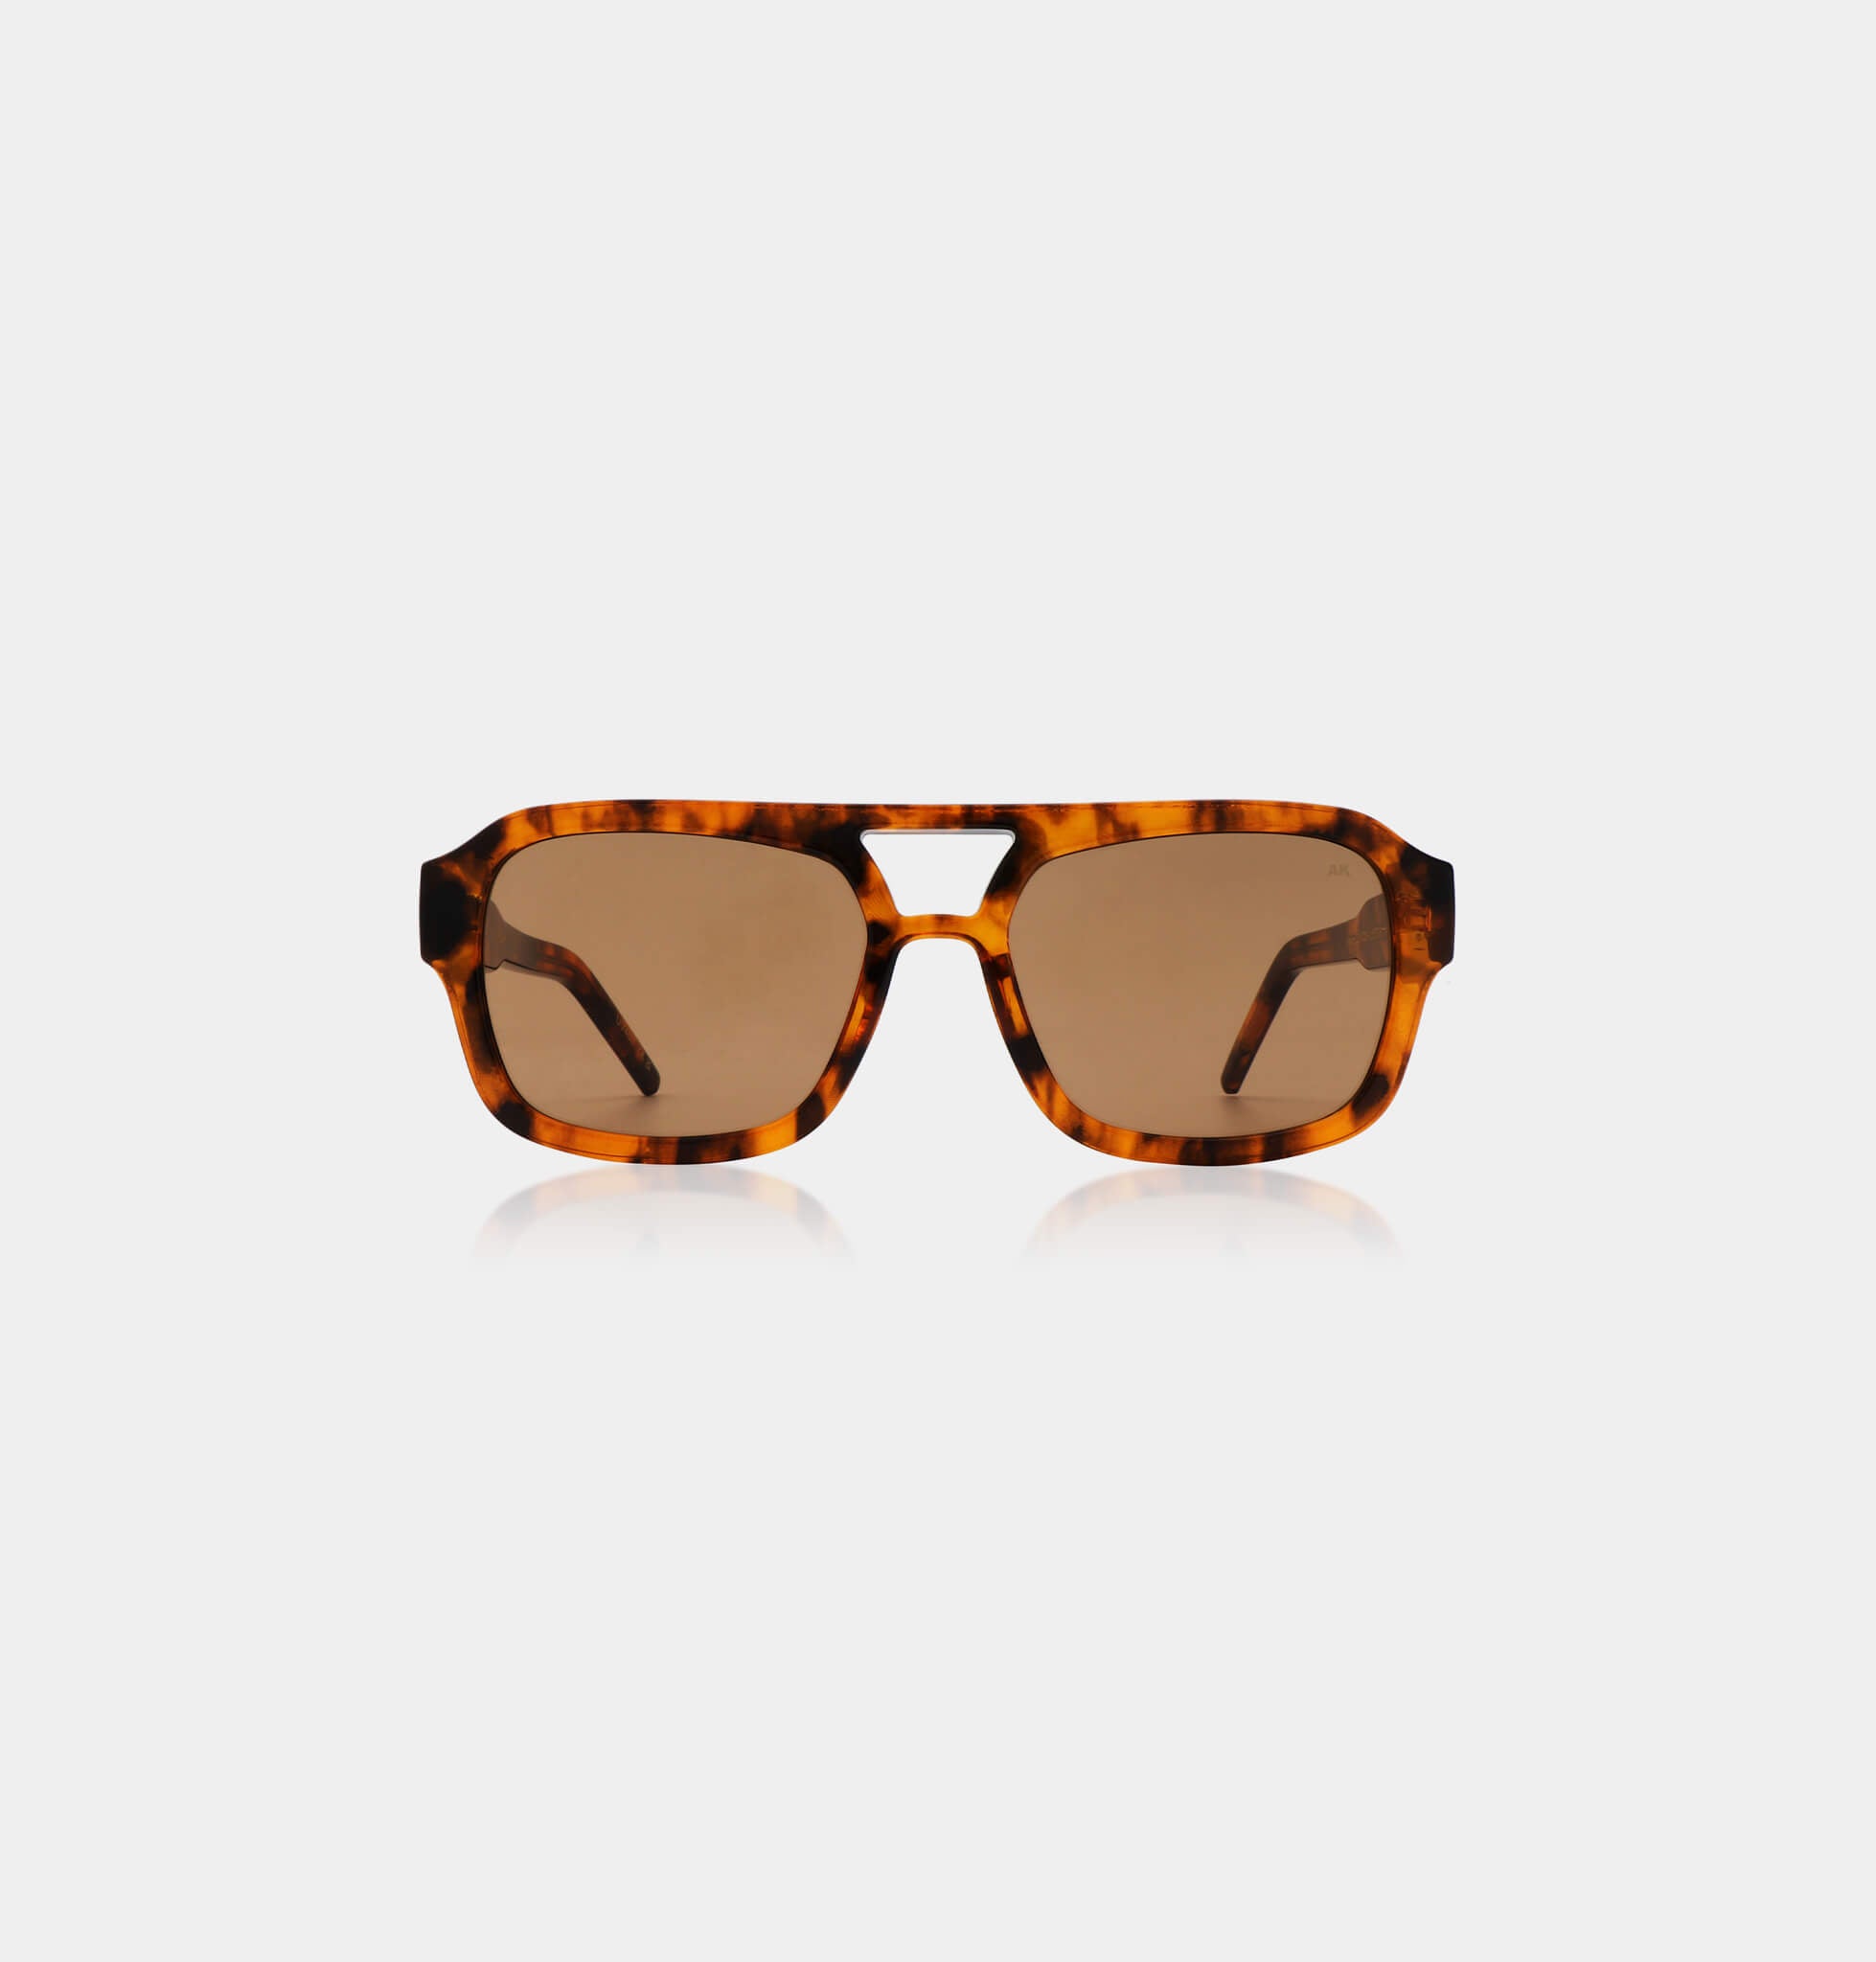 Kaya sunglasses in havana